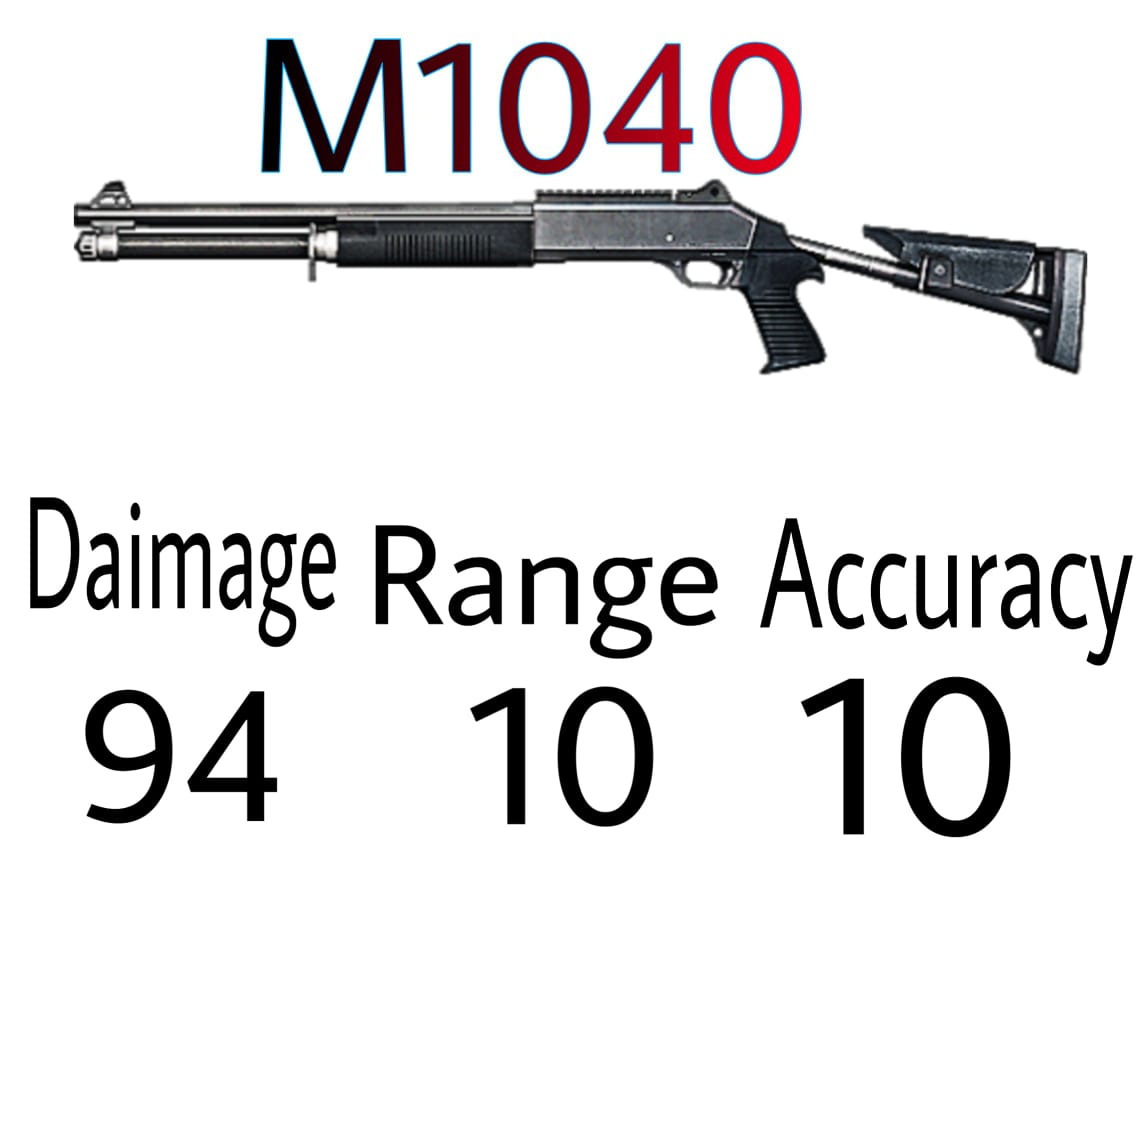 Know all about M1040 Shortgun – Rahman Gammer